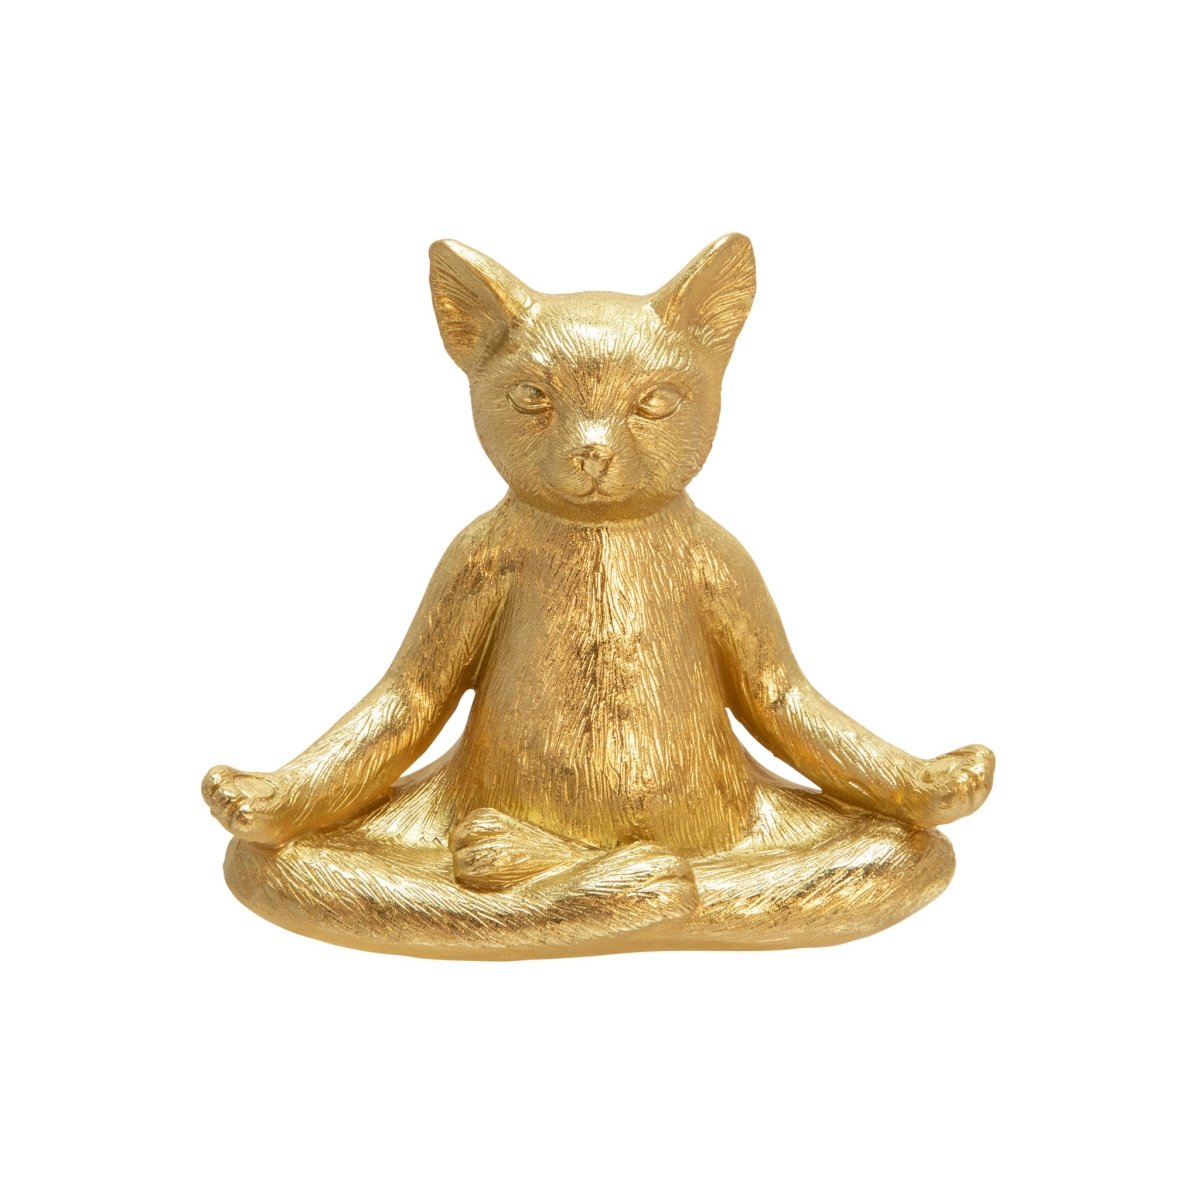 Sagebrook Home Gold Polyresin Yoga Cat Figurine, 7"H - lily & onyx